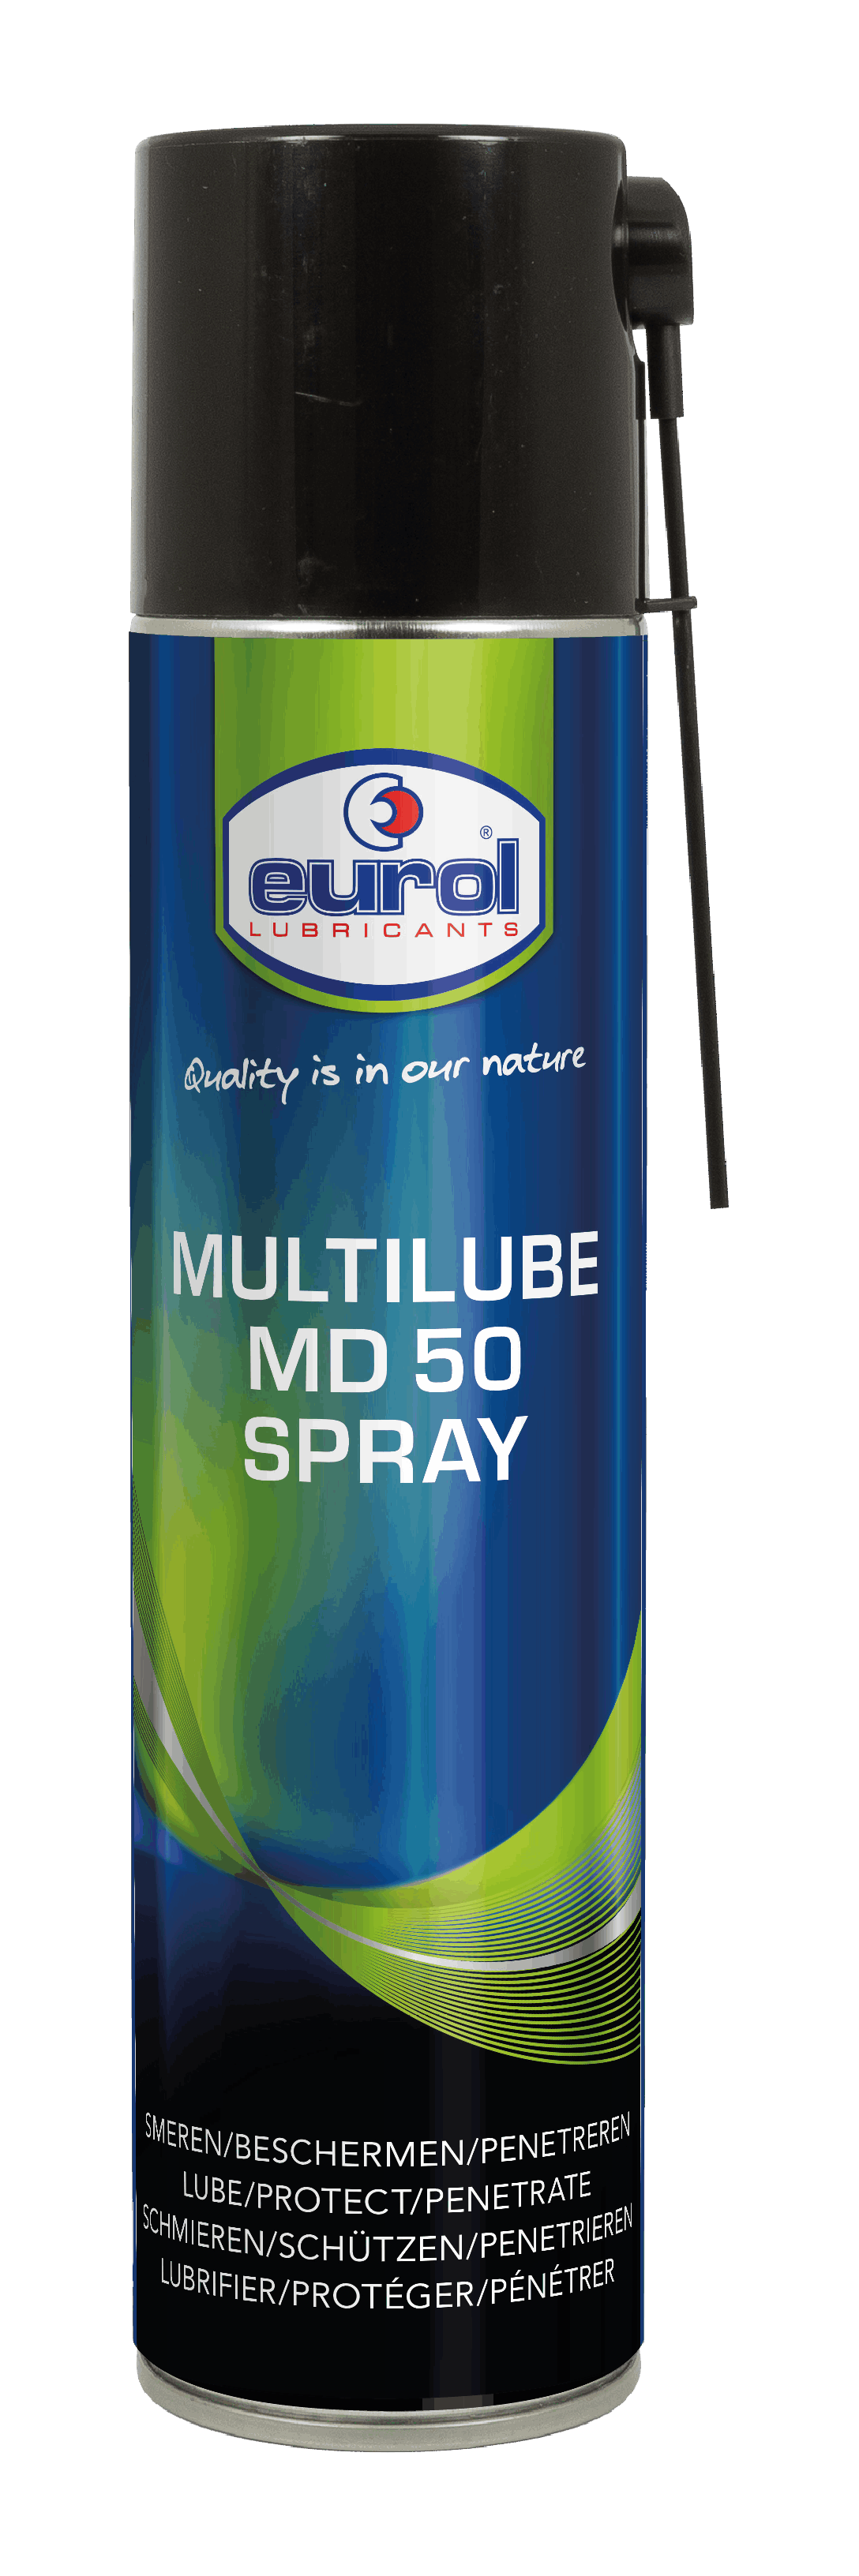 Multilube MD 50 Spray